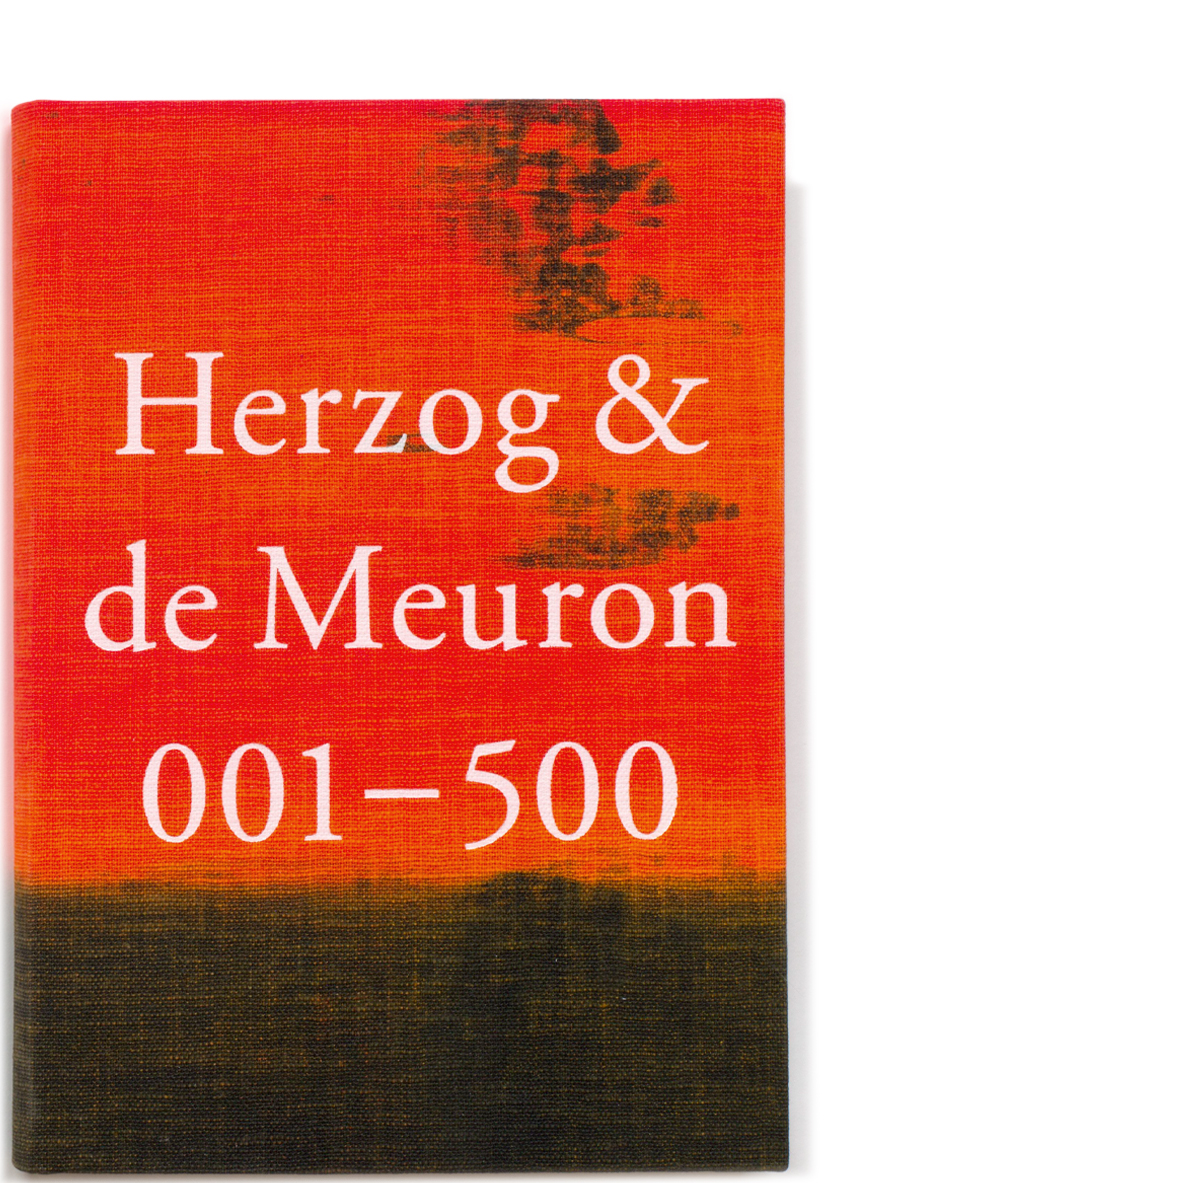 Herzog & de Meuron 001 – 500 , Regular Edition